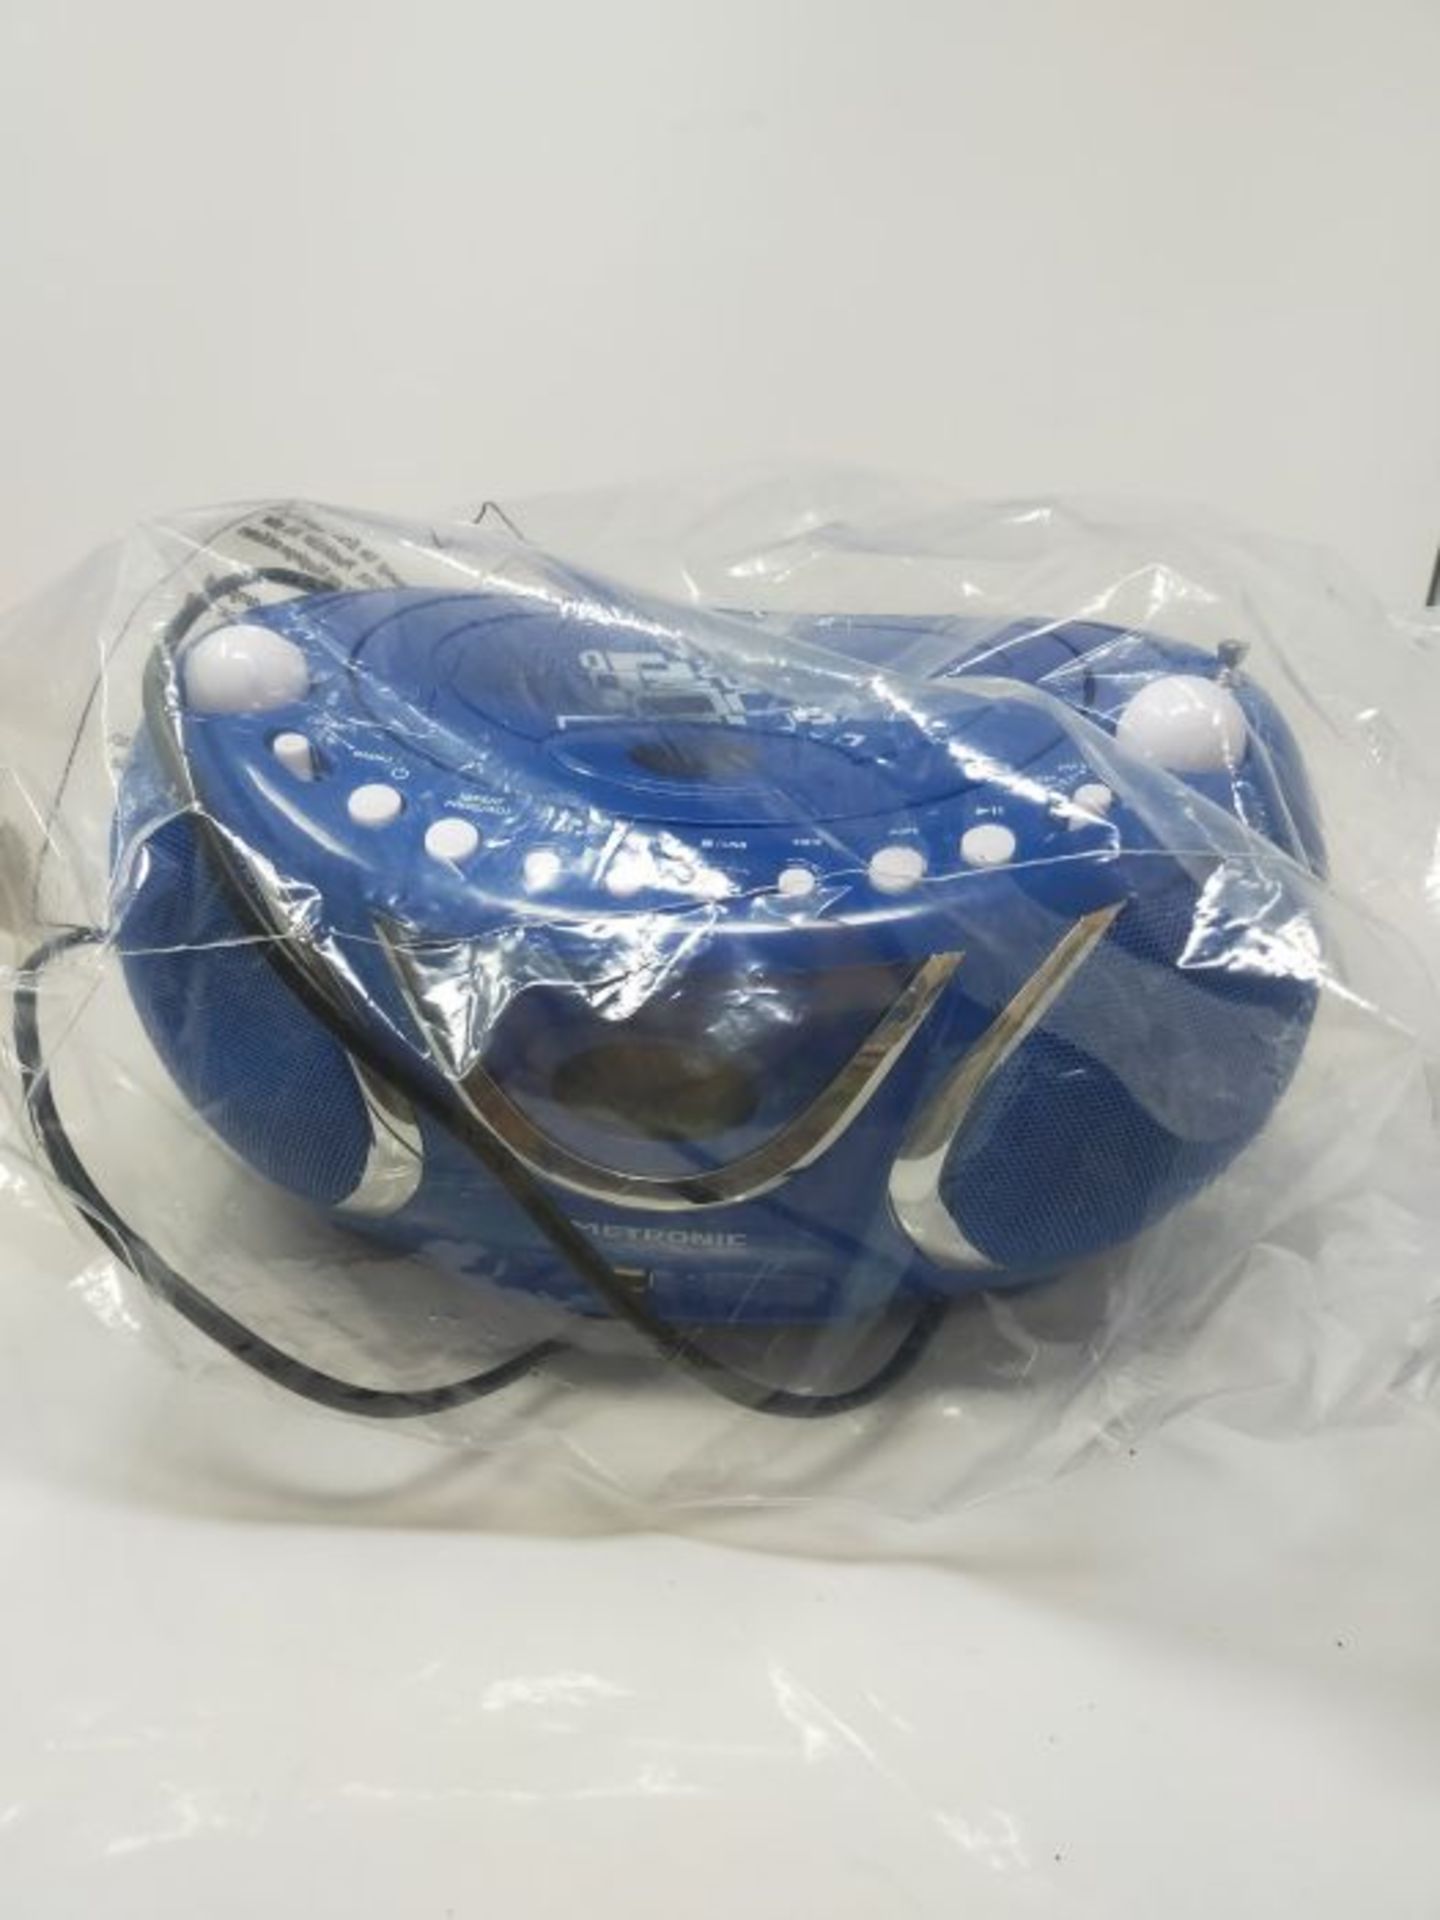 Metronic Gulli Radio/CD Player / MP3 Portable blue - Image 2 of 6